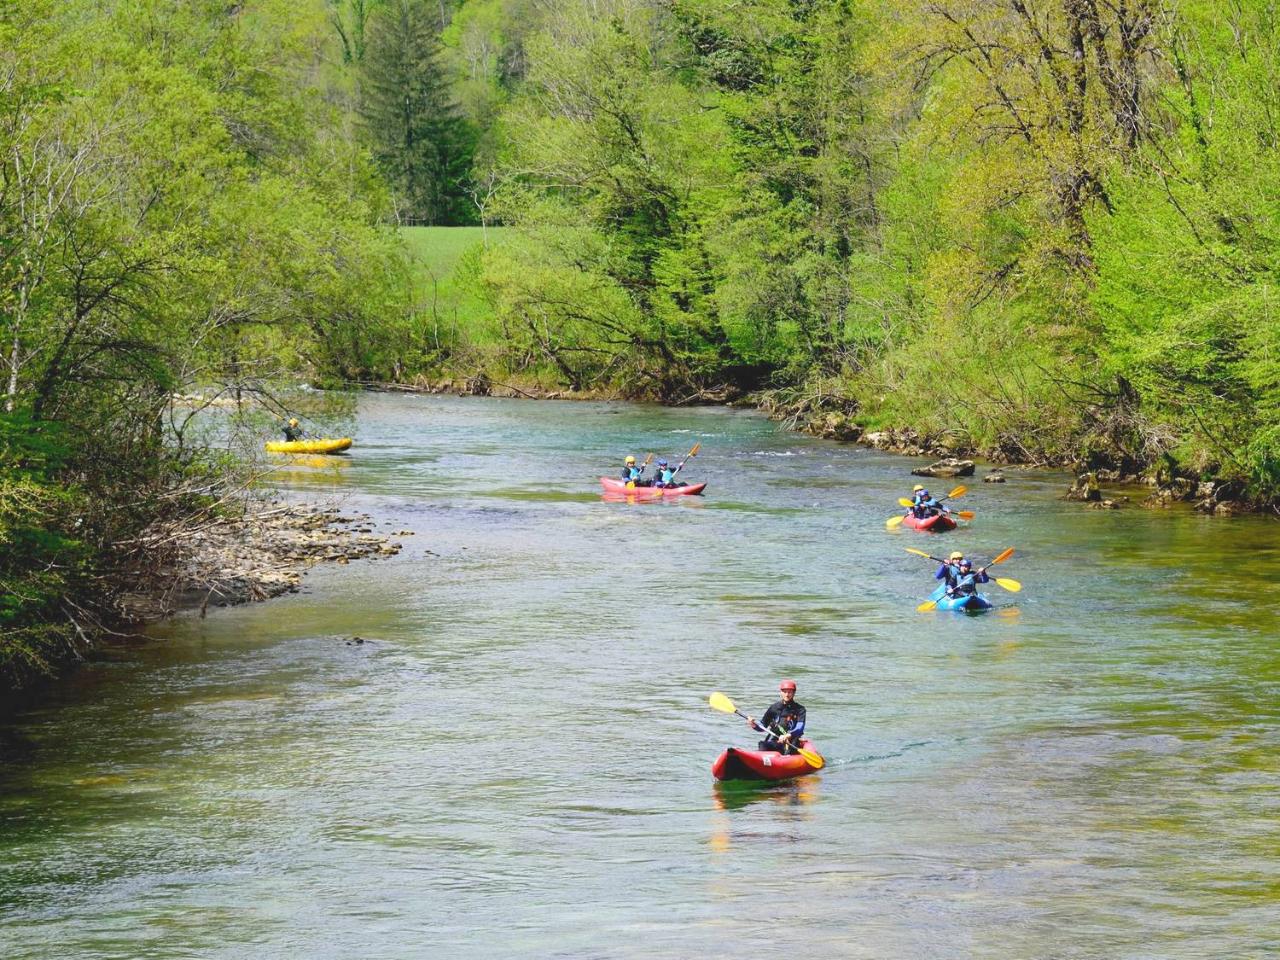 Kayaking/Canoeing on Kupa River, Croatia - Discovery Trip